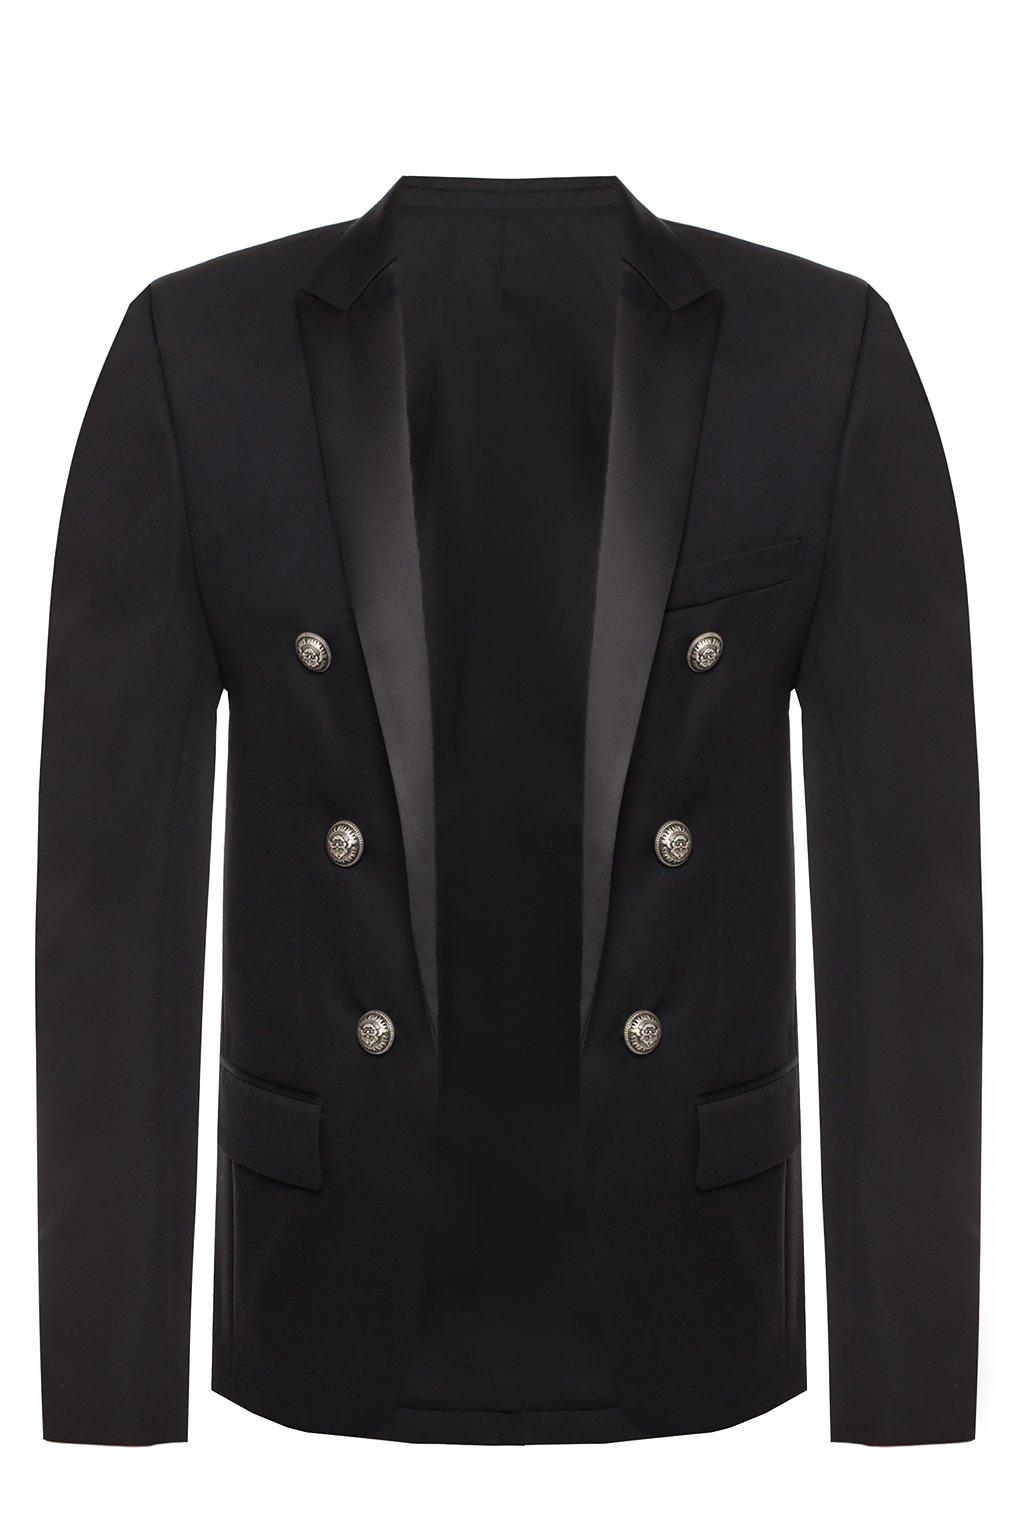 Balmain Silk Double-breasted Blazer in Black for Men - Lyst